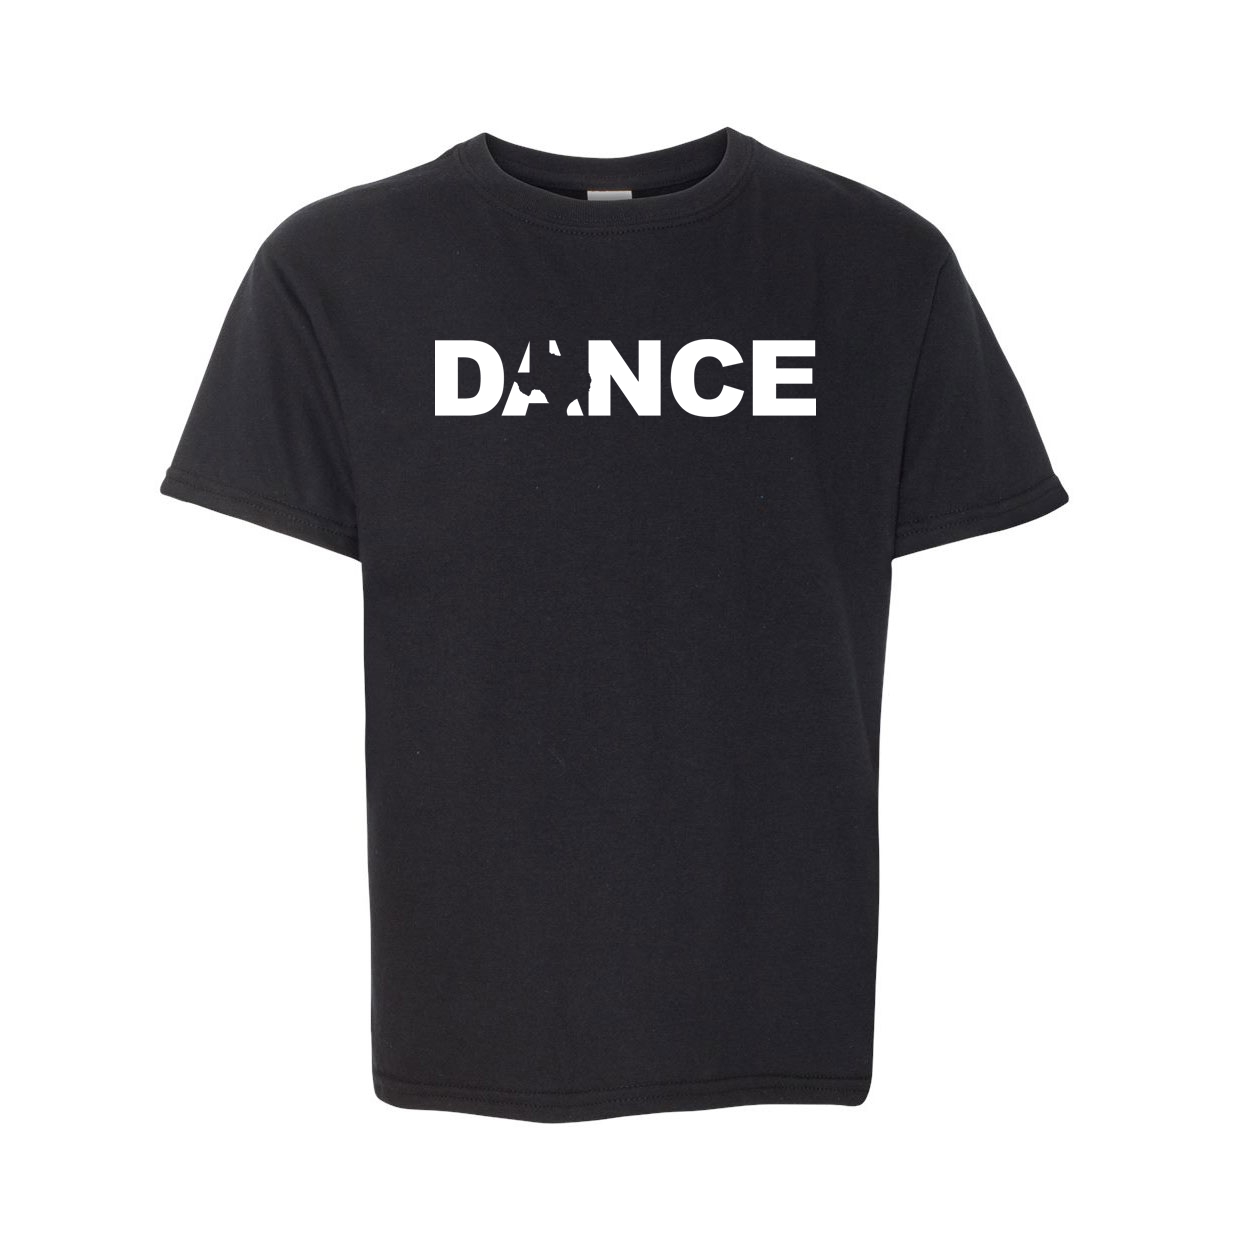 Dance Texas Classic Youth T-Shirt Black (White Logo)